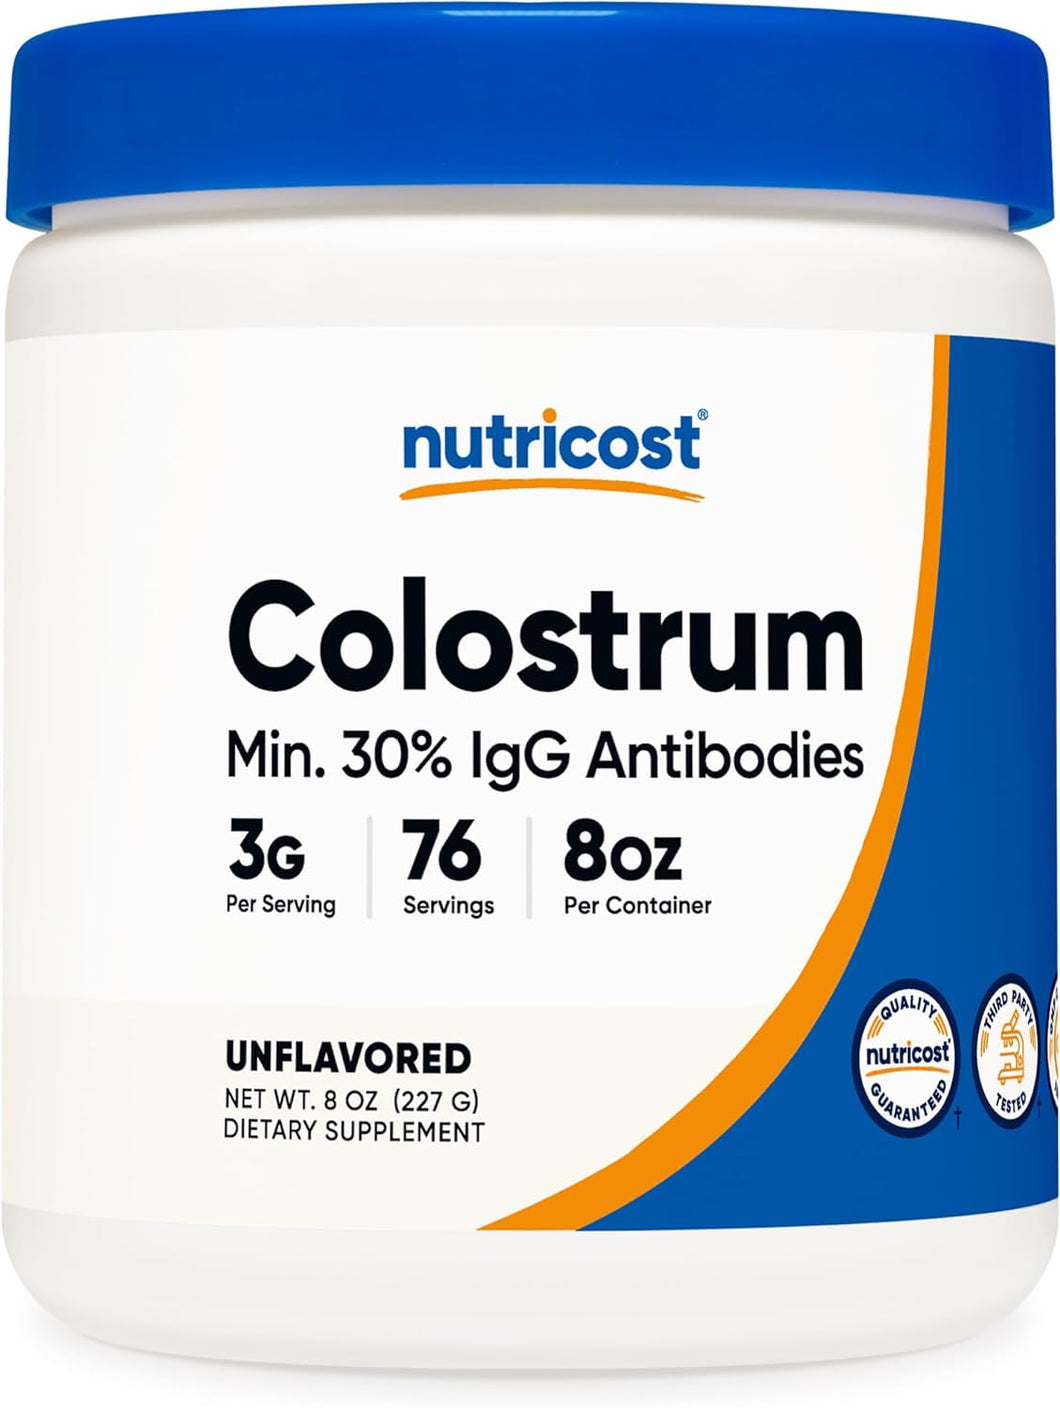 Nutricost Colostrum Powder 8 oz, Lactoferrin and Minimum 30% Immunoglobulins (IgG), from Bovine Colostrum, 3g Per Serving, 76 Servings